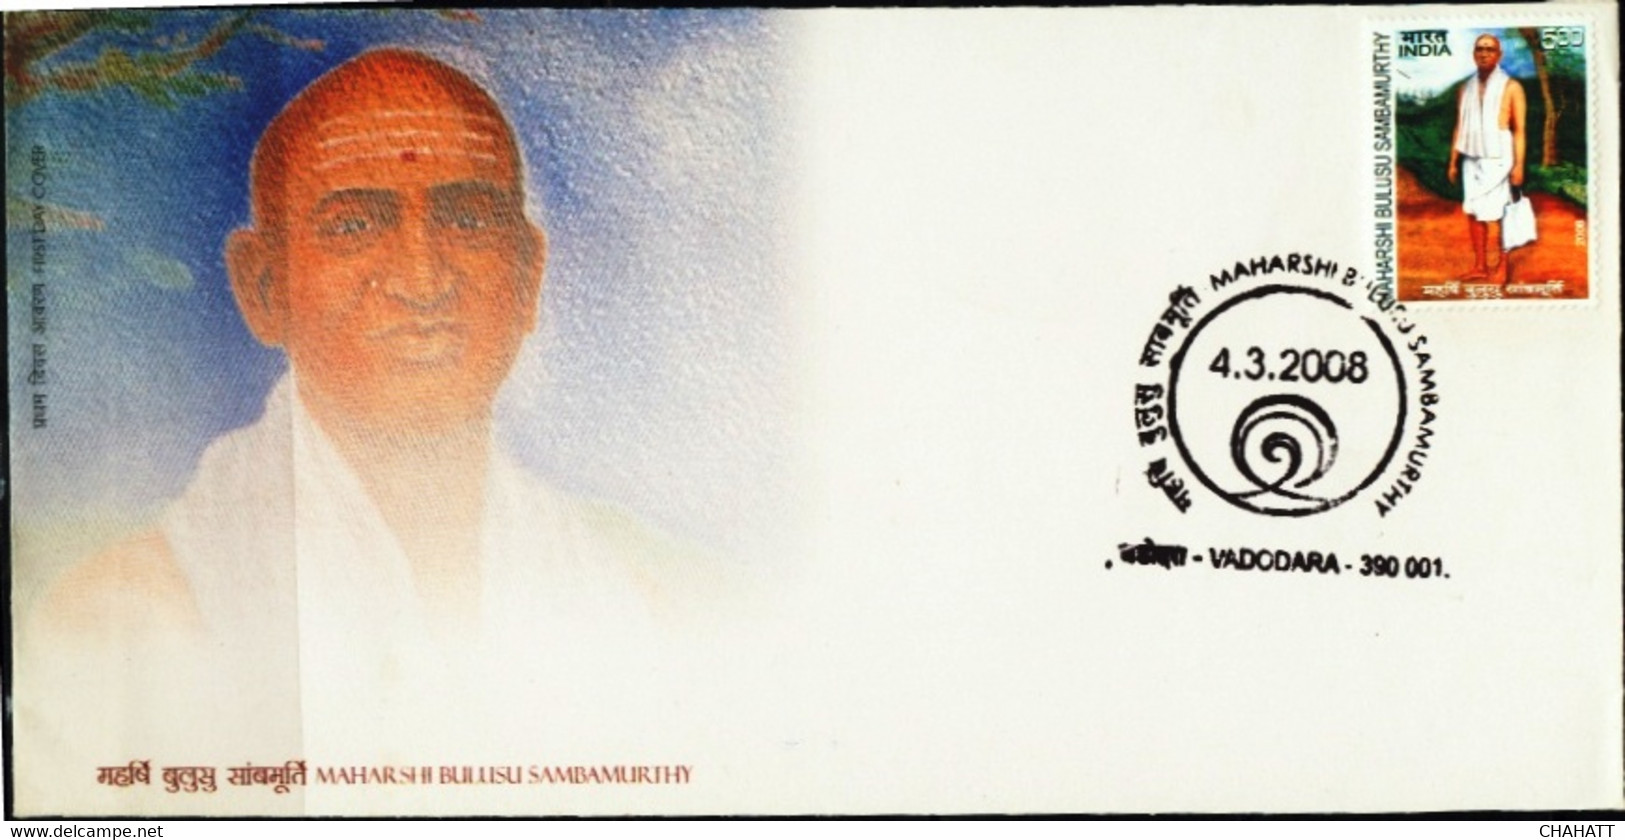 HINDUISM-SAGE MAHARSHI B SAMBAMURTHY- FDC-INDIA-2008 -BX3-36 - Induismo